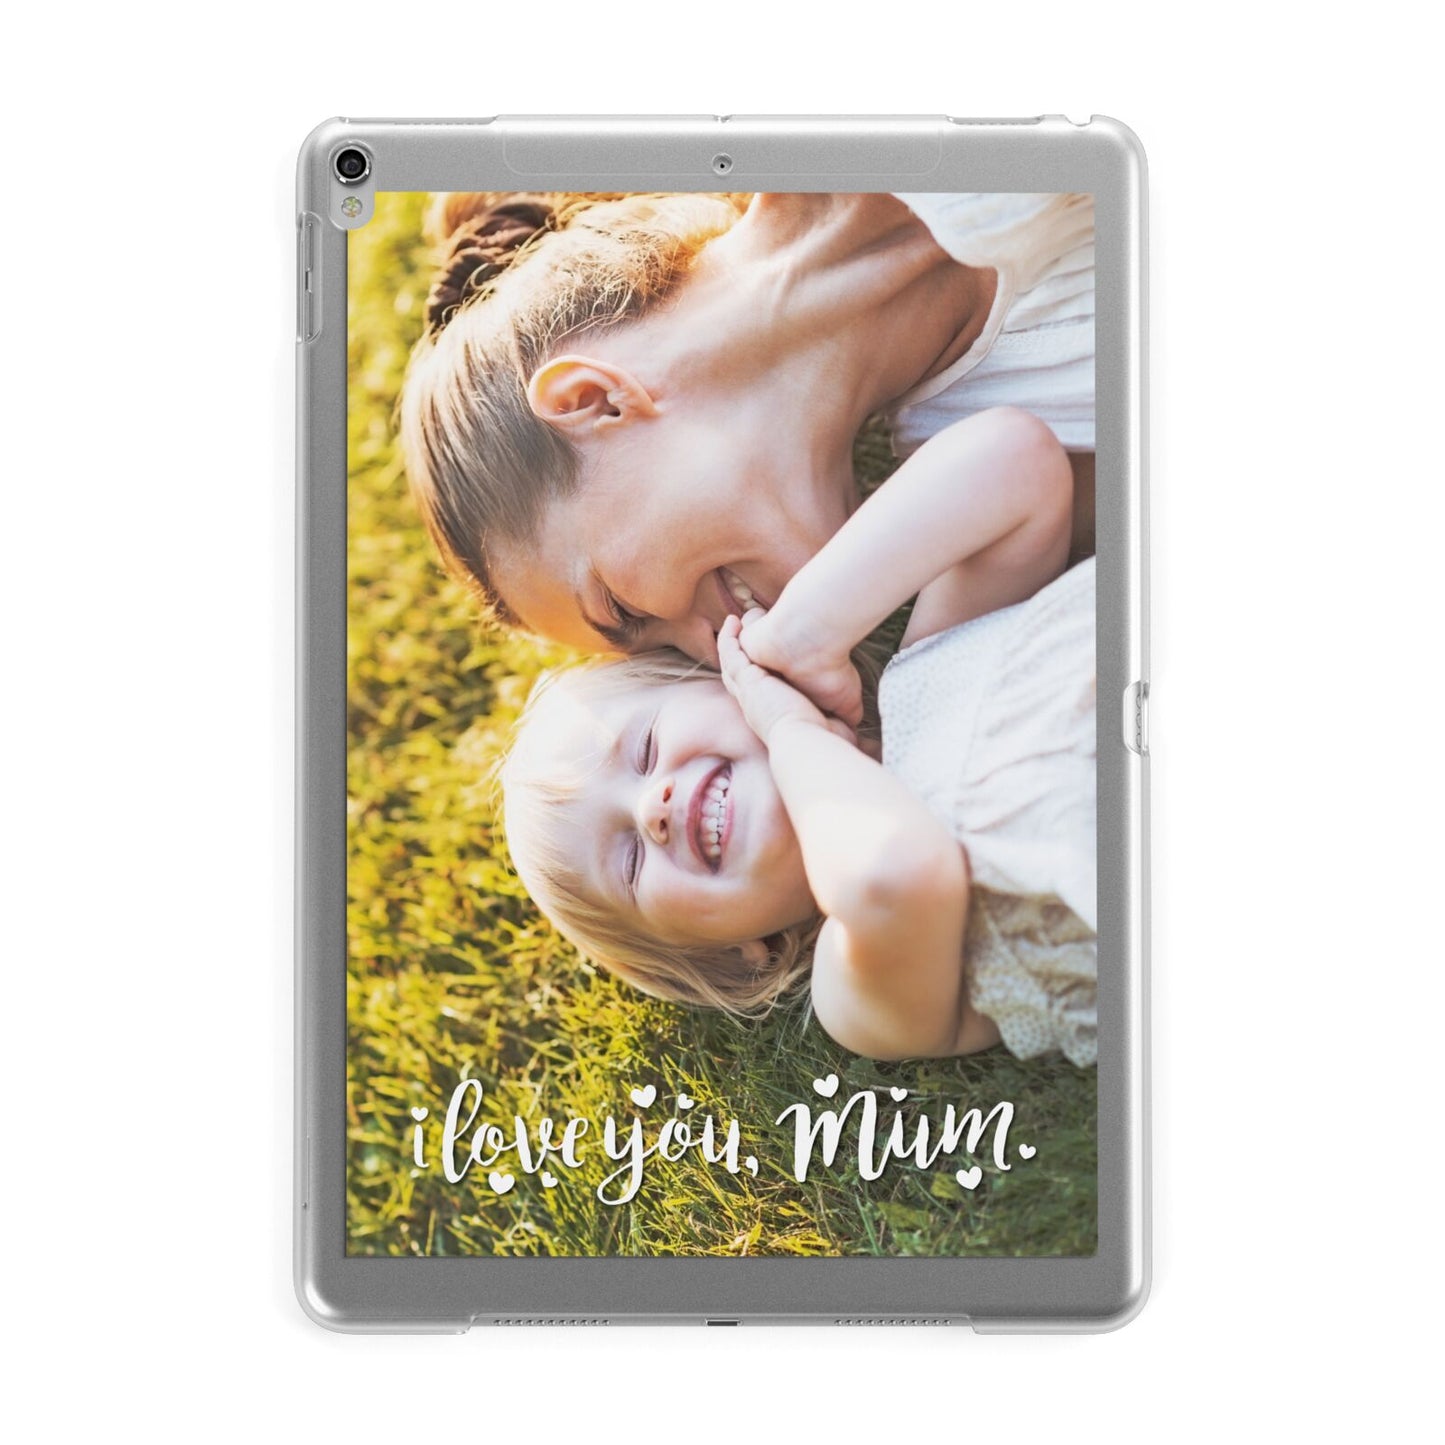 Love You Mum Photo Upload Apple iPad Silver Case